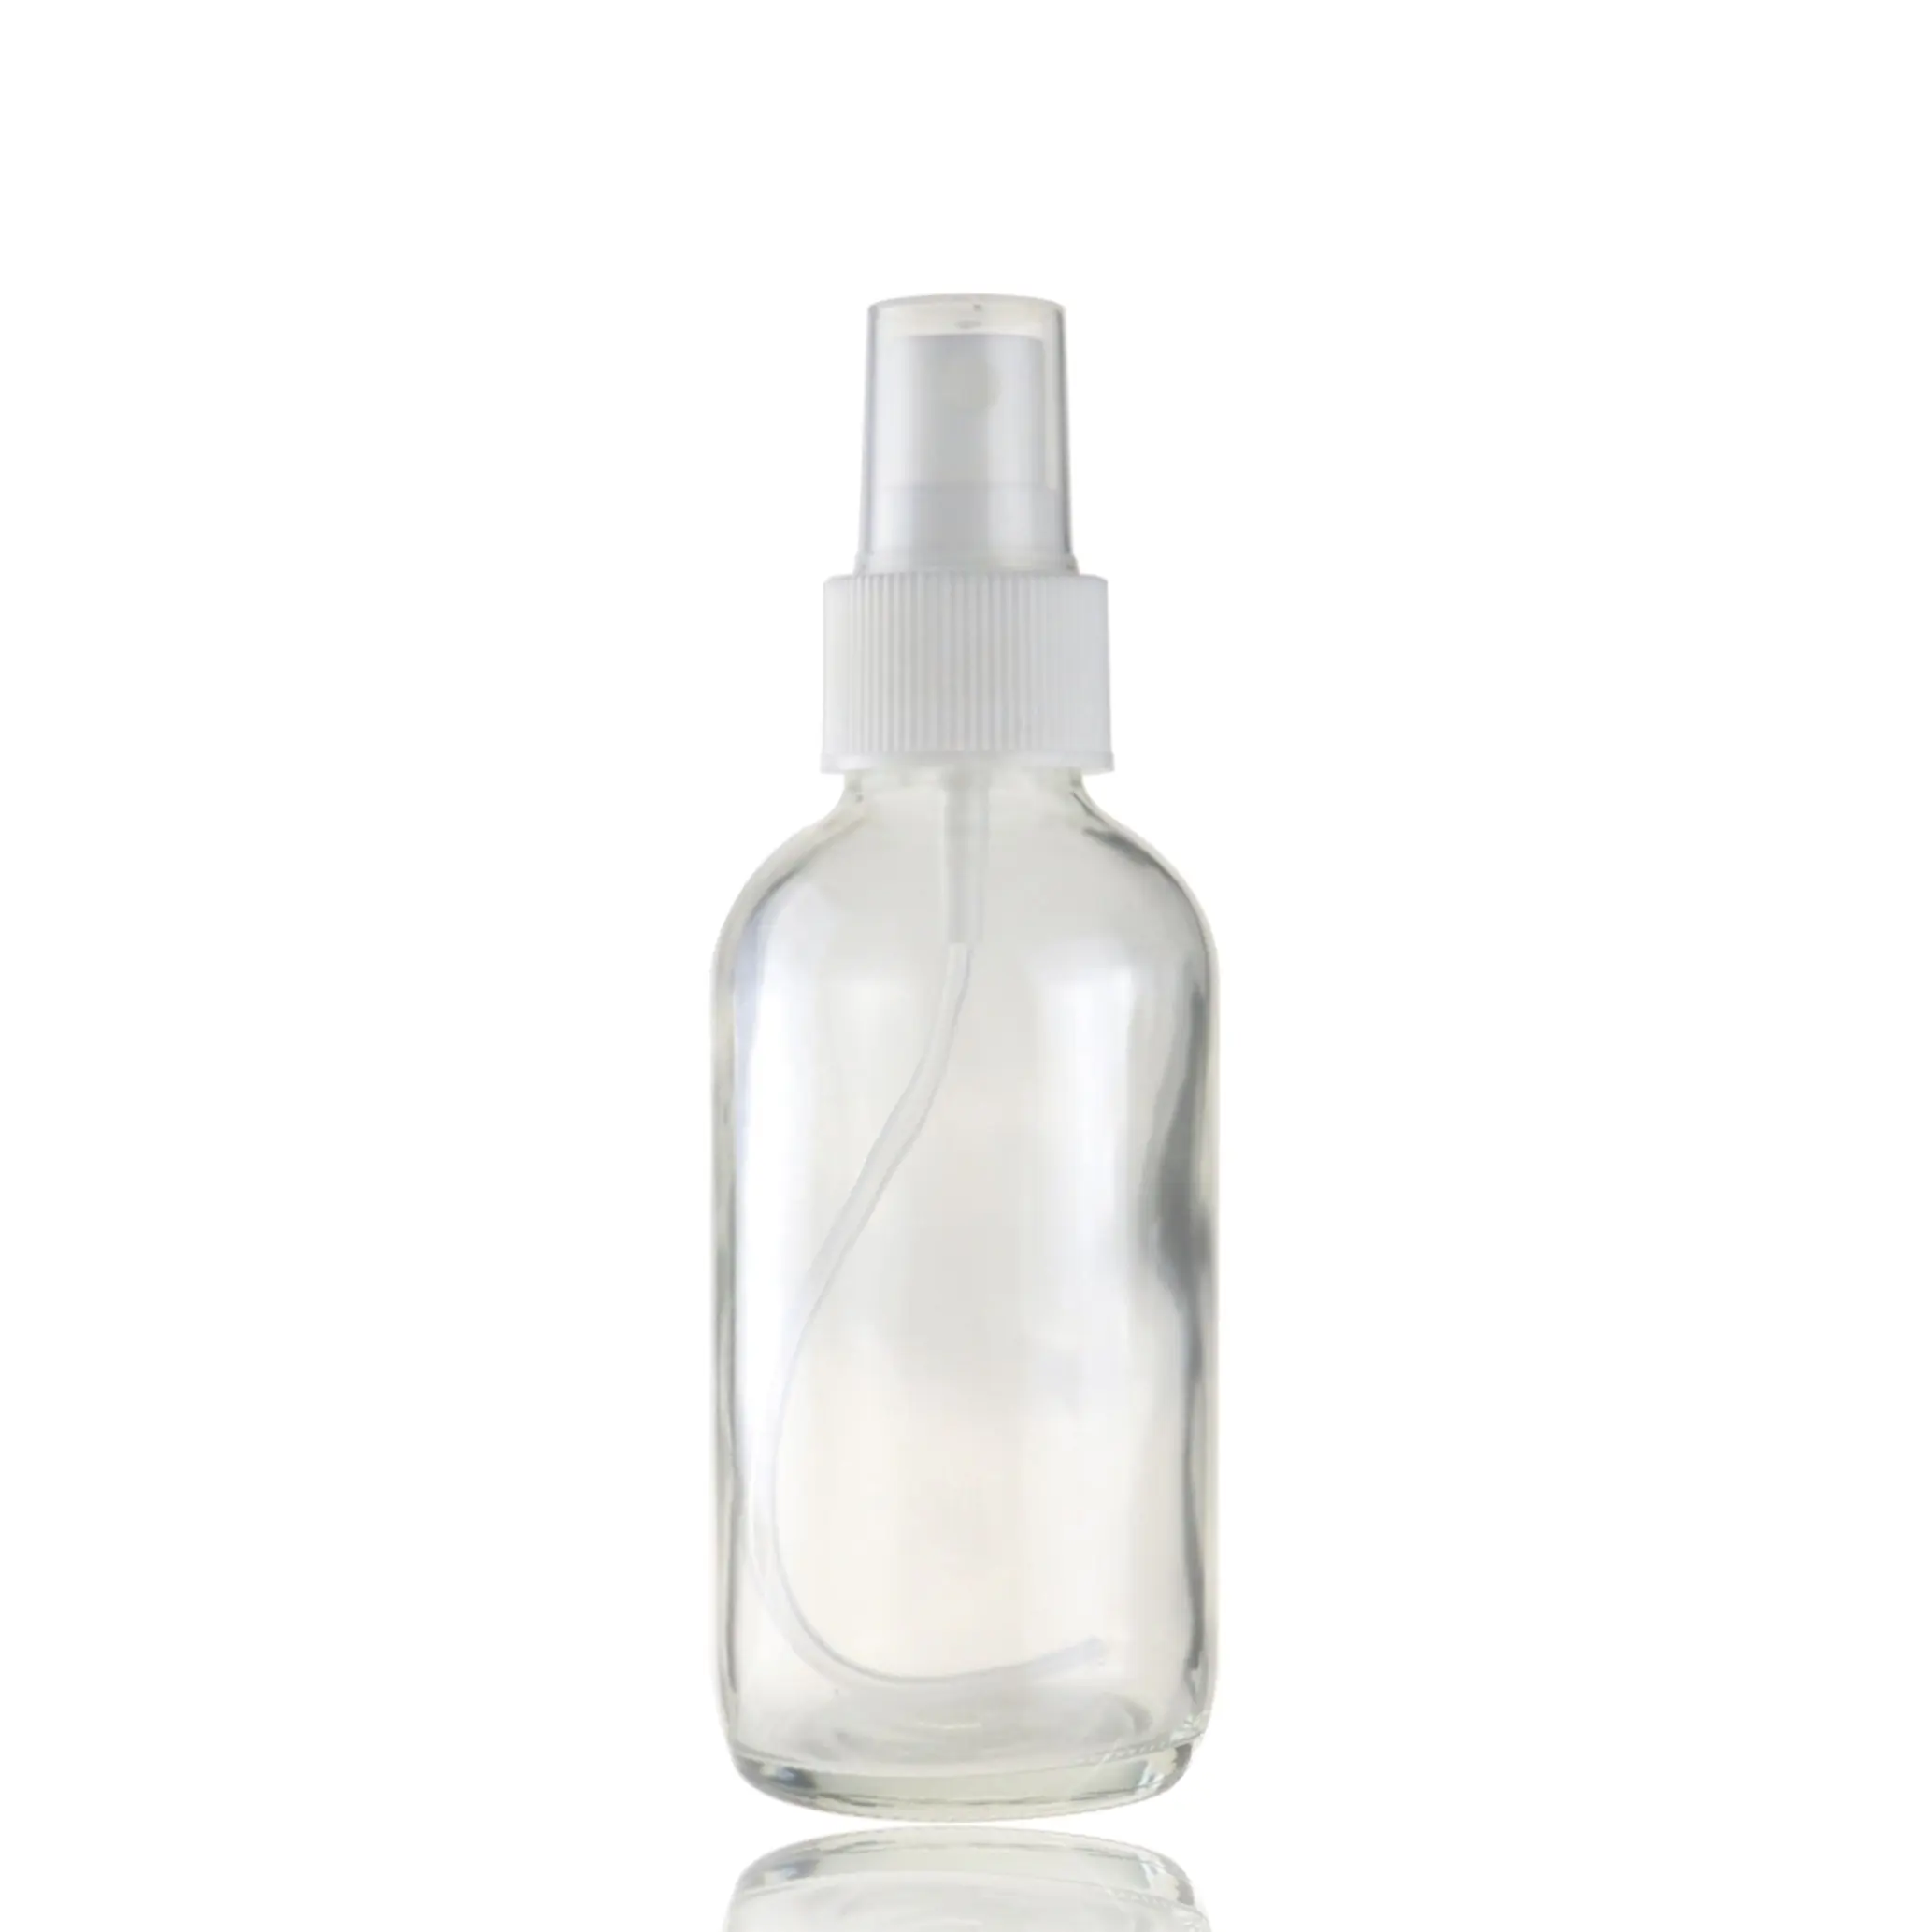 Botella de vidrio transparente para perfume, espray de 120ml, transparente, ámbar, negro, 2 oz, vapor cosmético, rellenable